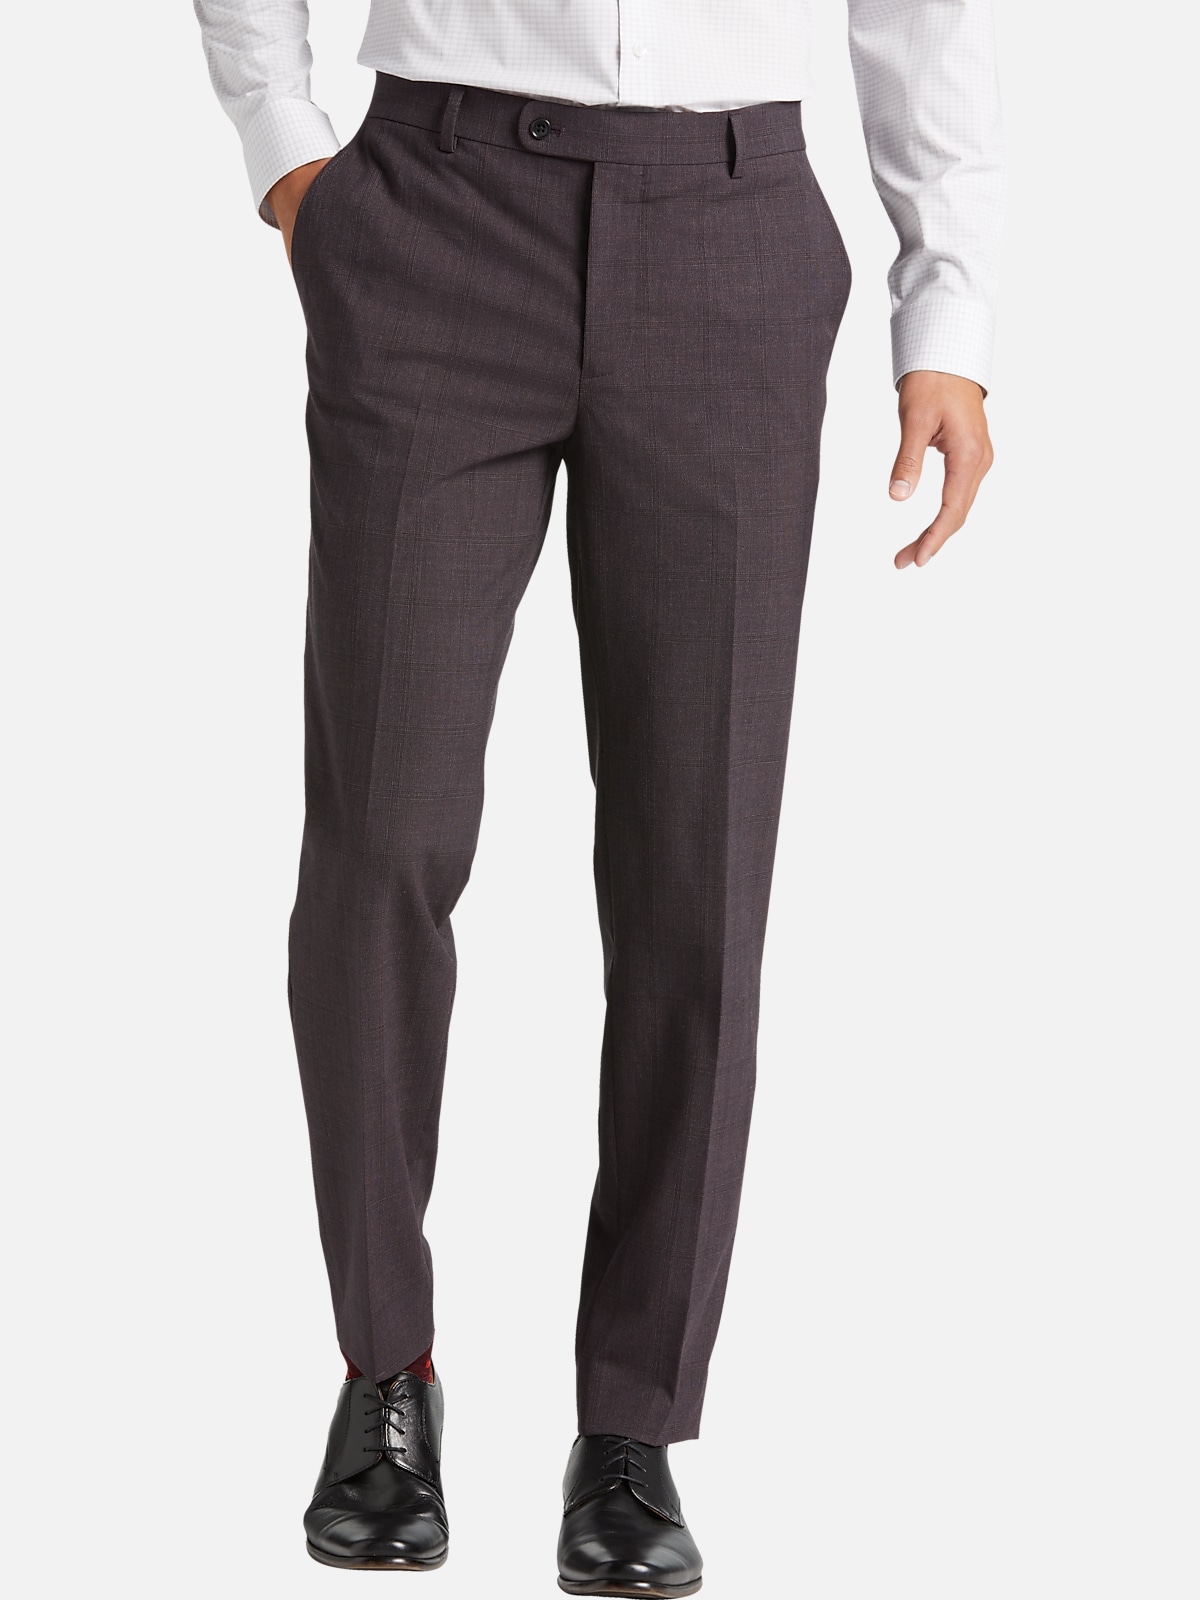 Wilke-Rodriguez Slim Fit Suit Separates Pants | All Sale| Men's Wearhouse